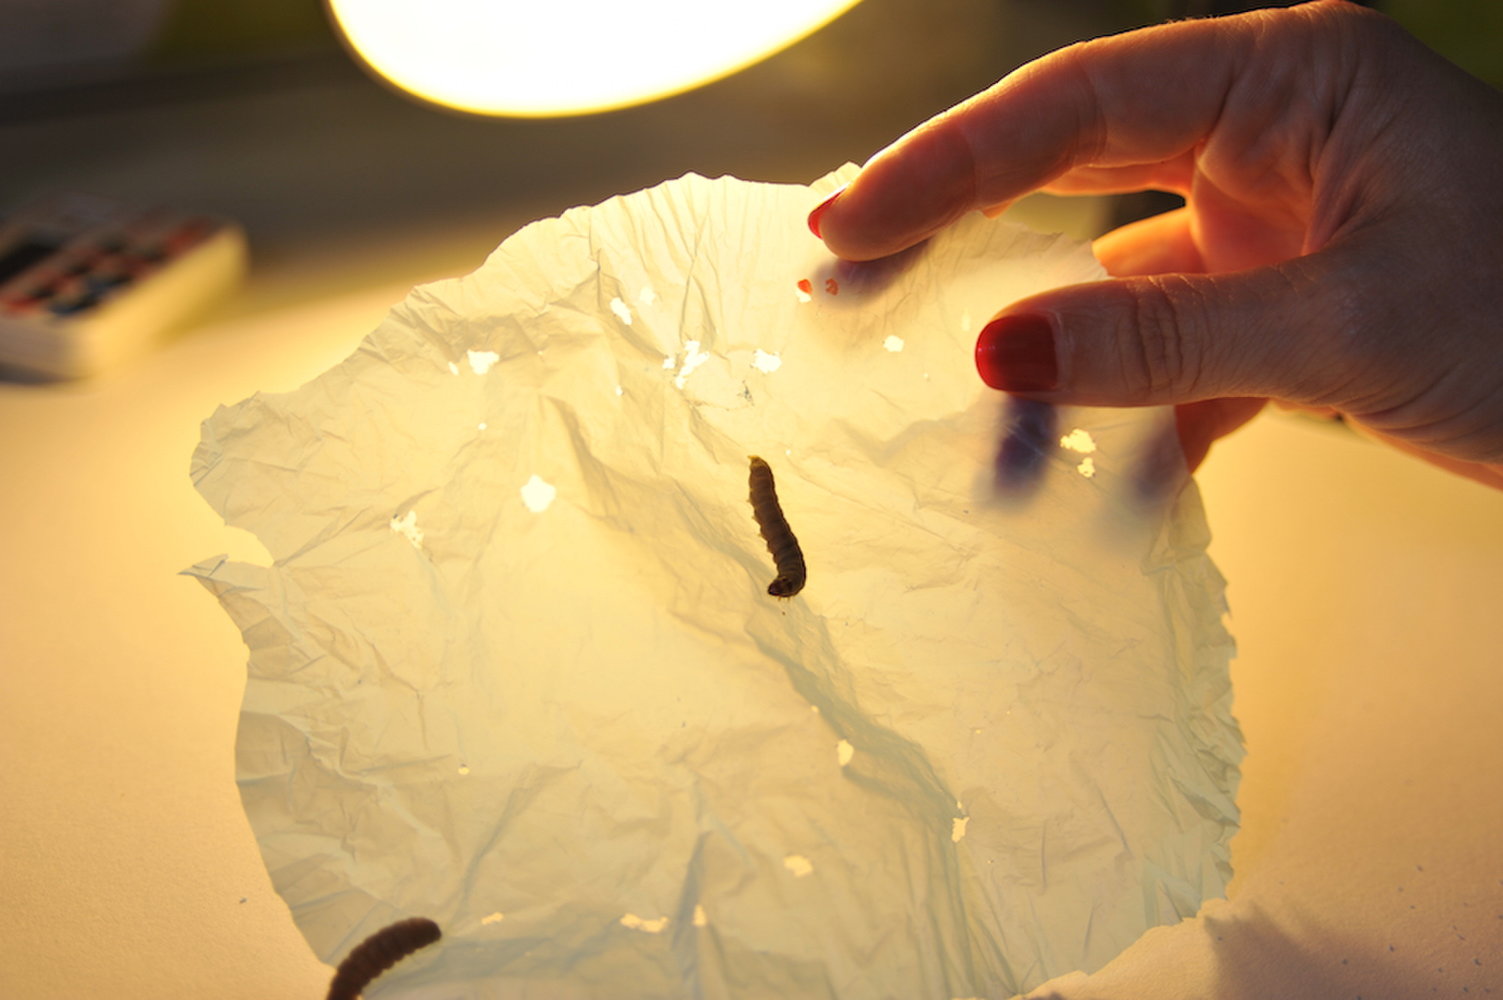 Polyethylene bio-degradation by caterpillars of the wax moth Galleria mellonella